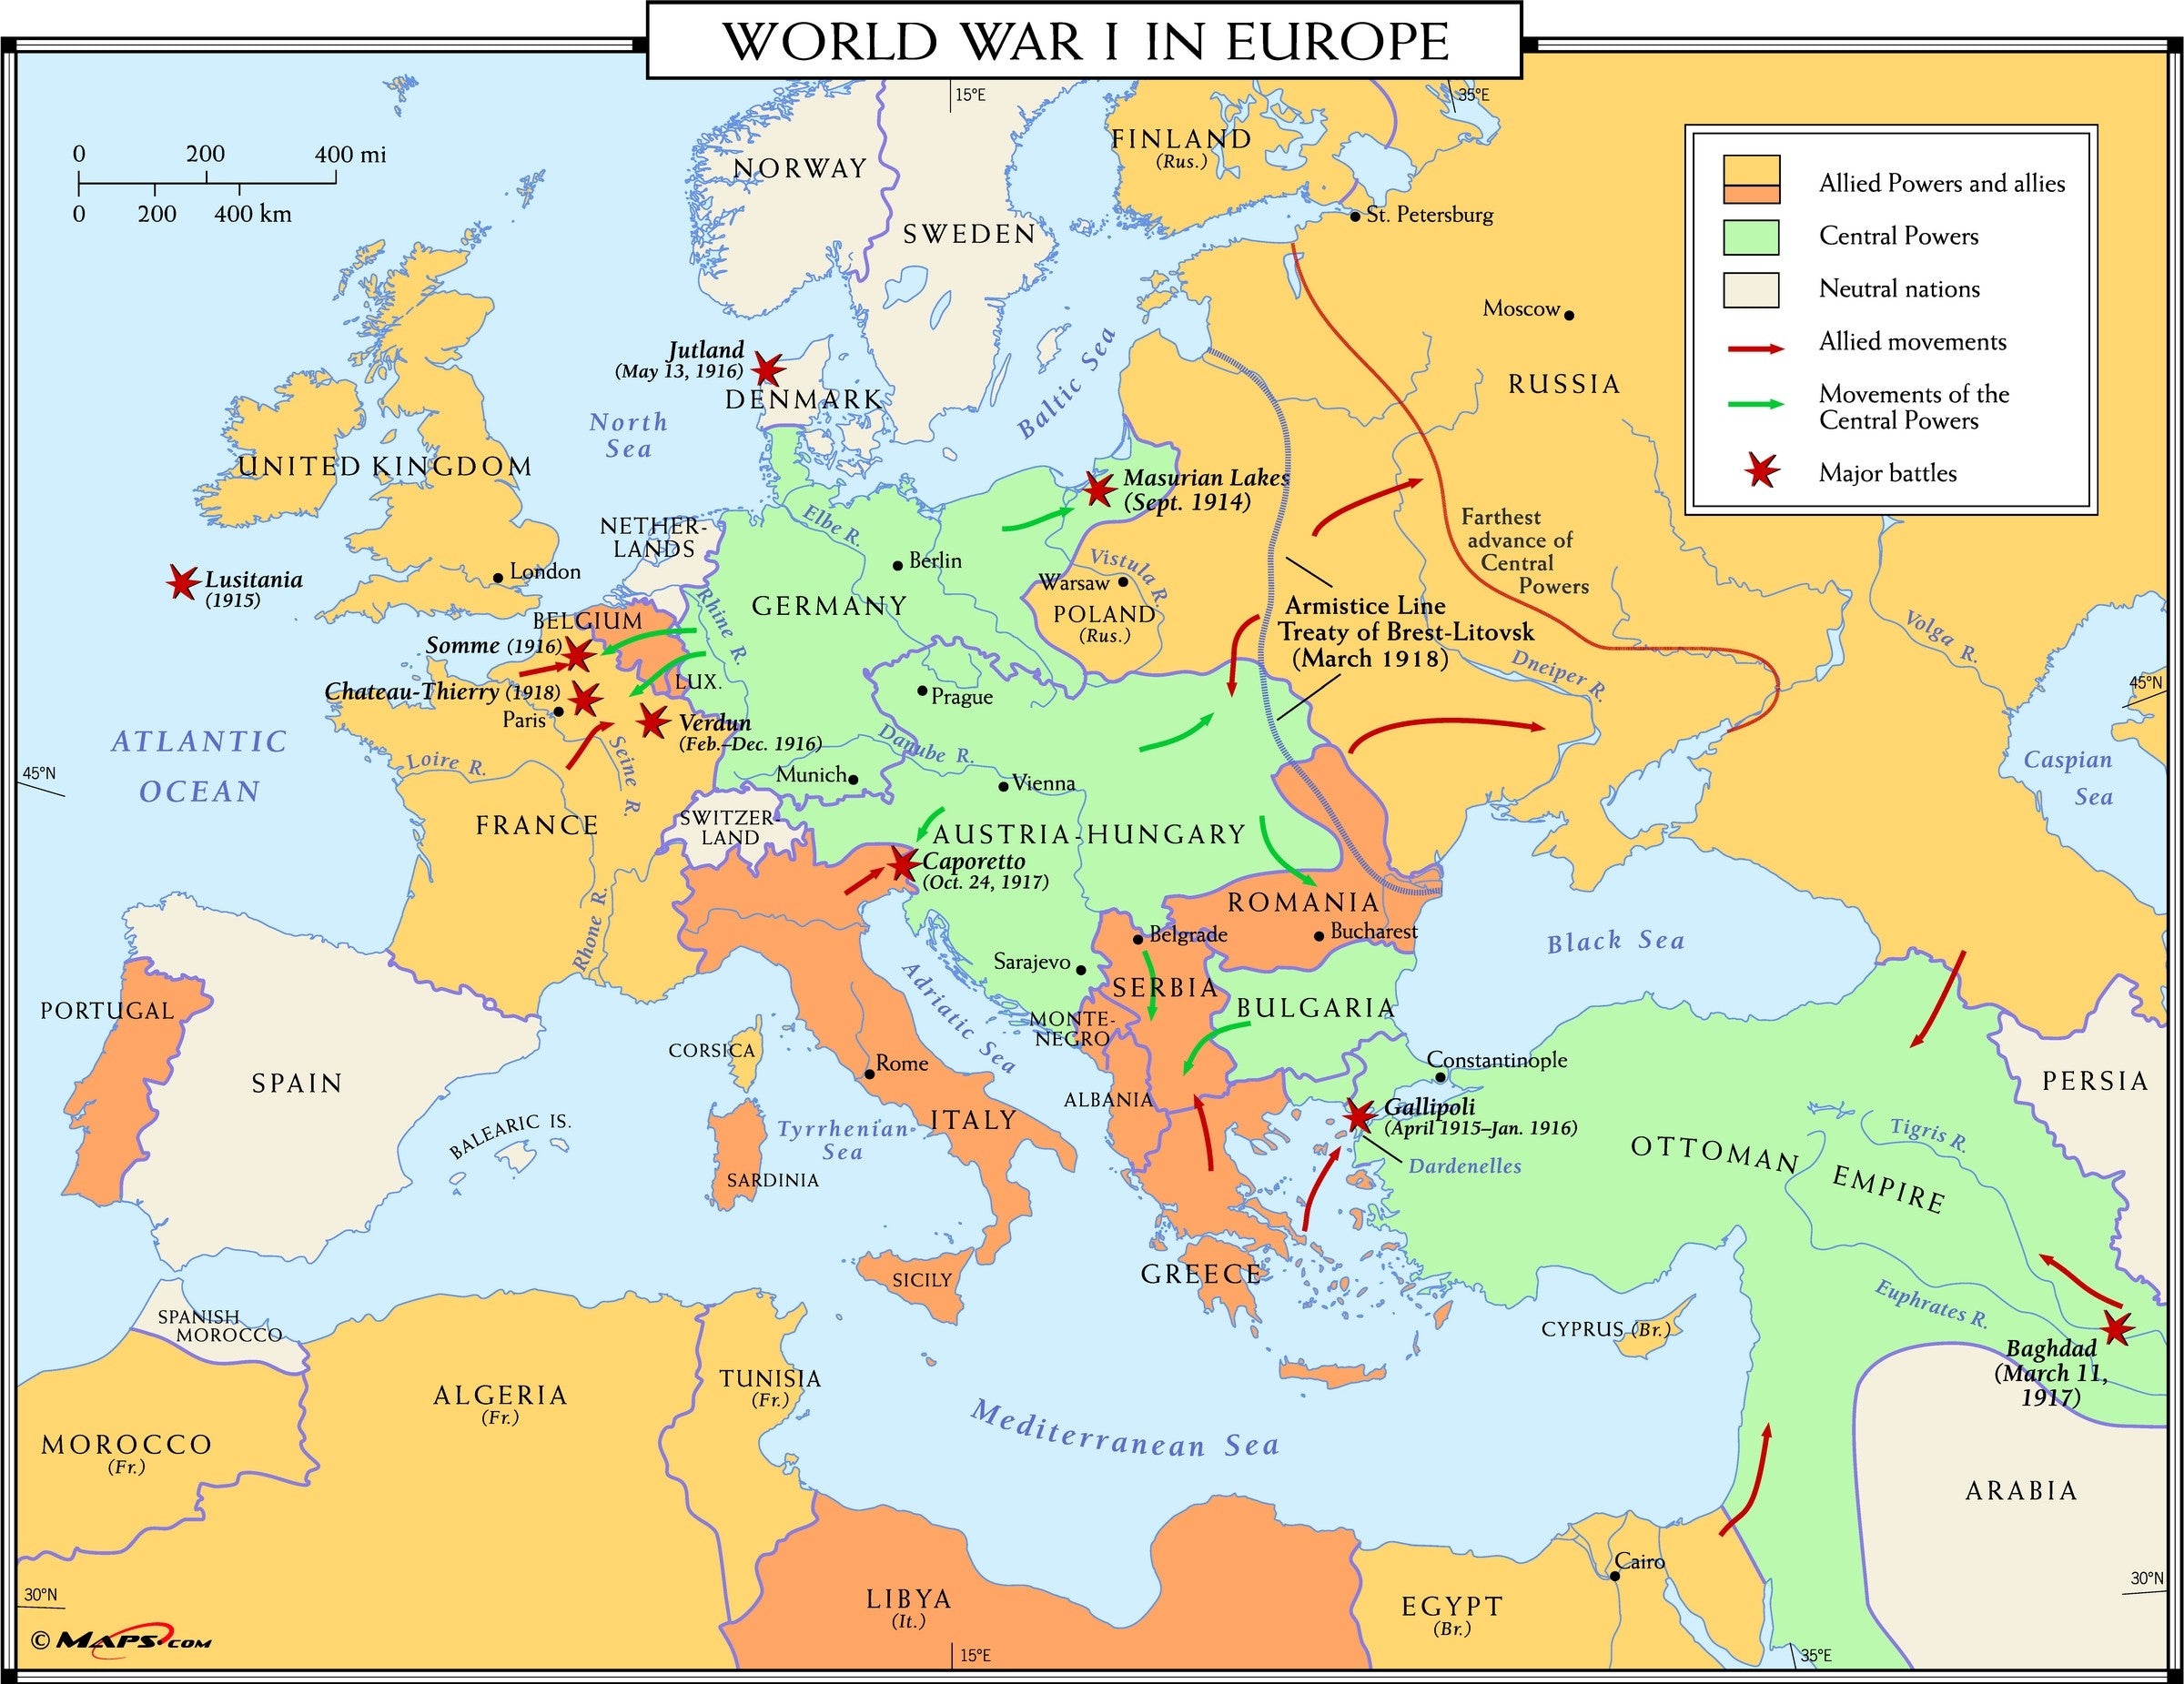 World War I Map Of Europe World War I in Europe Map | Maps.com.com